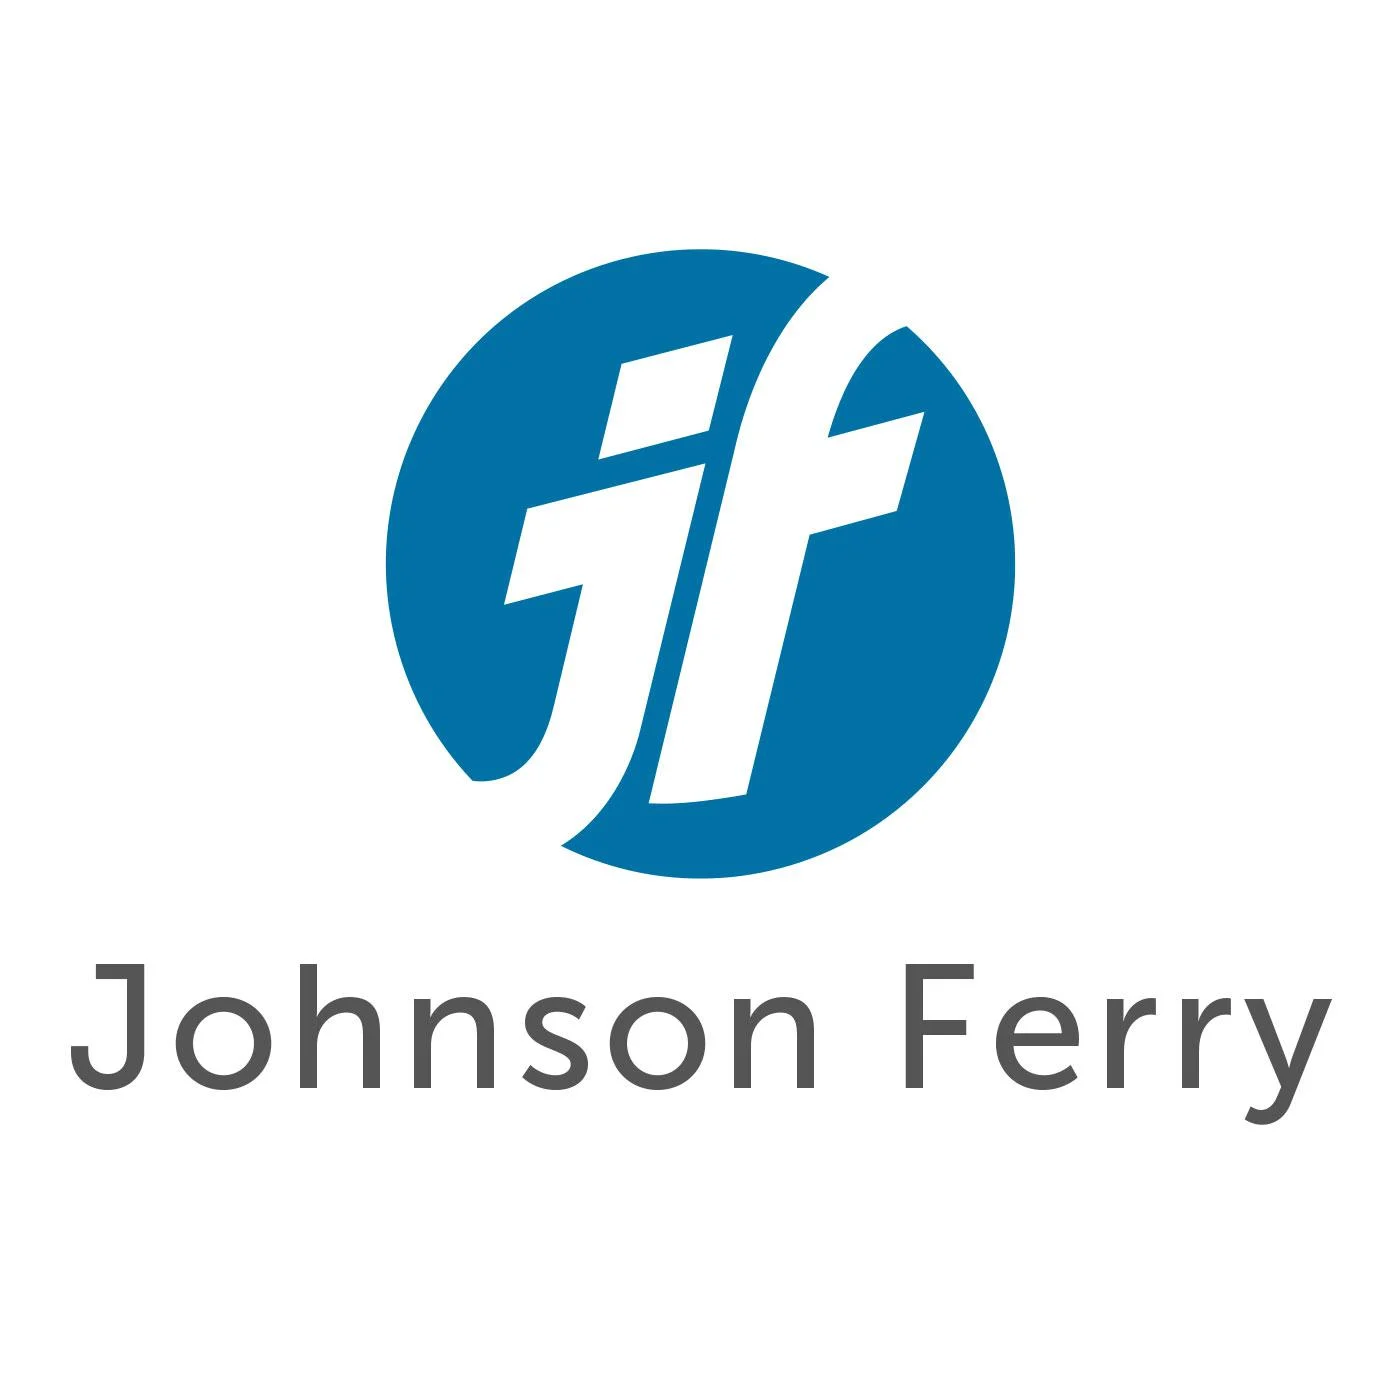 Johnson Ferry color logo